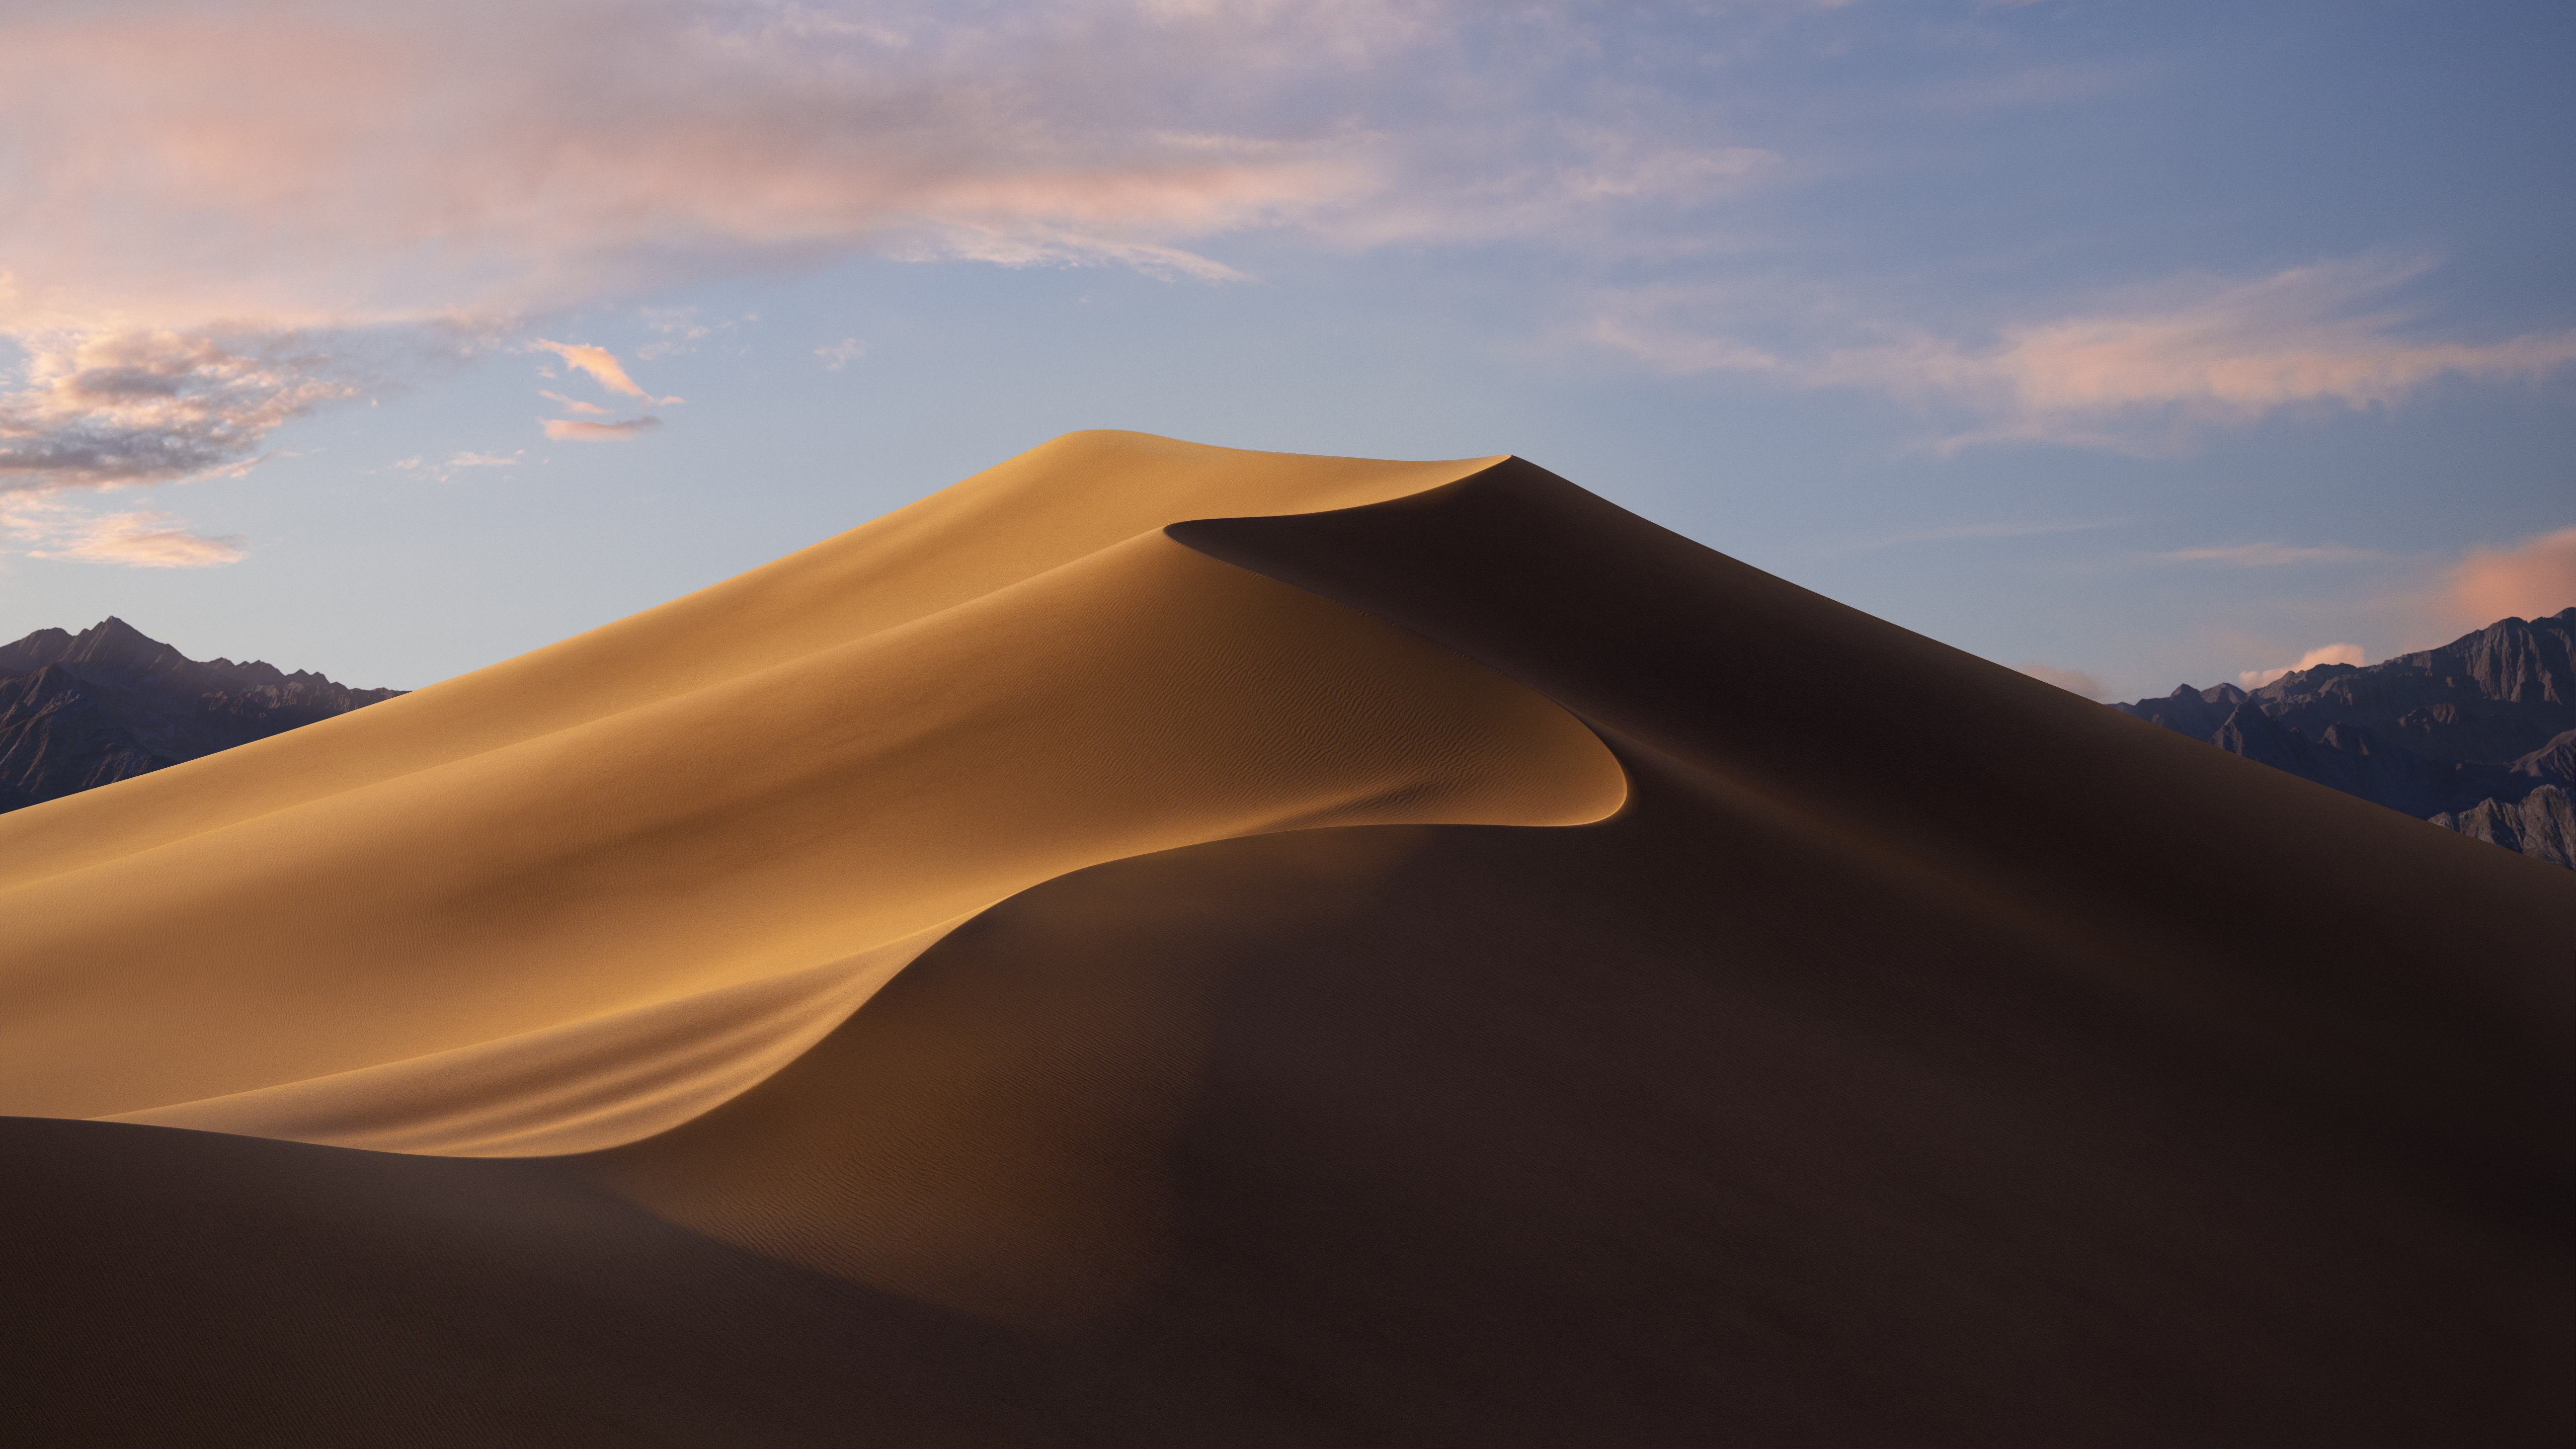 General 5120x2880 daylight California dunes sand nature desert